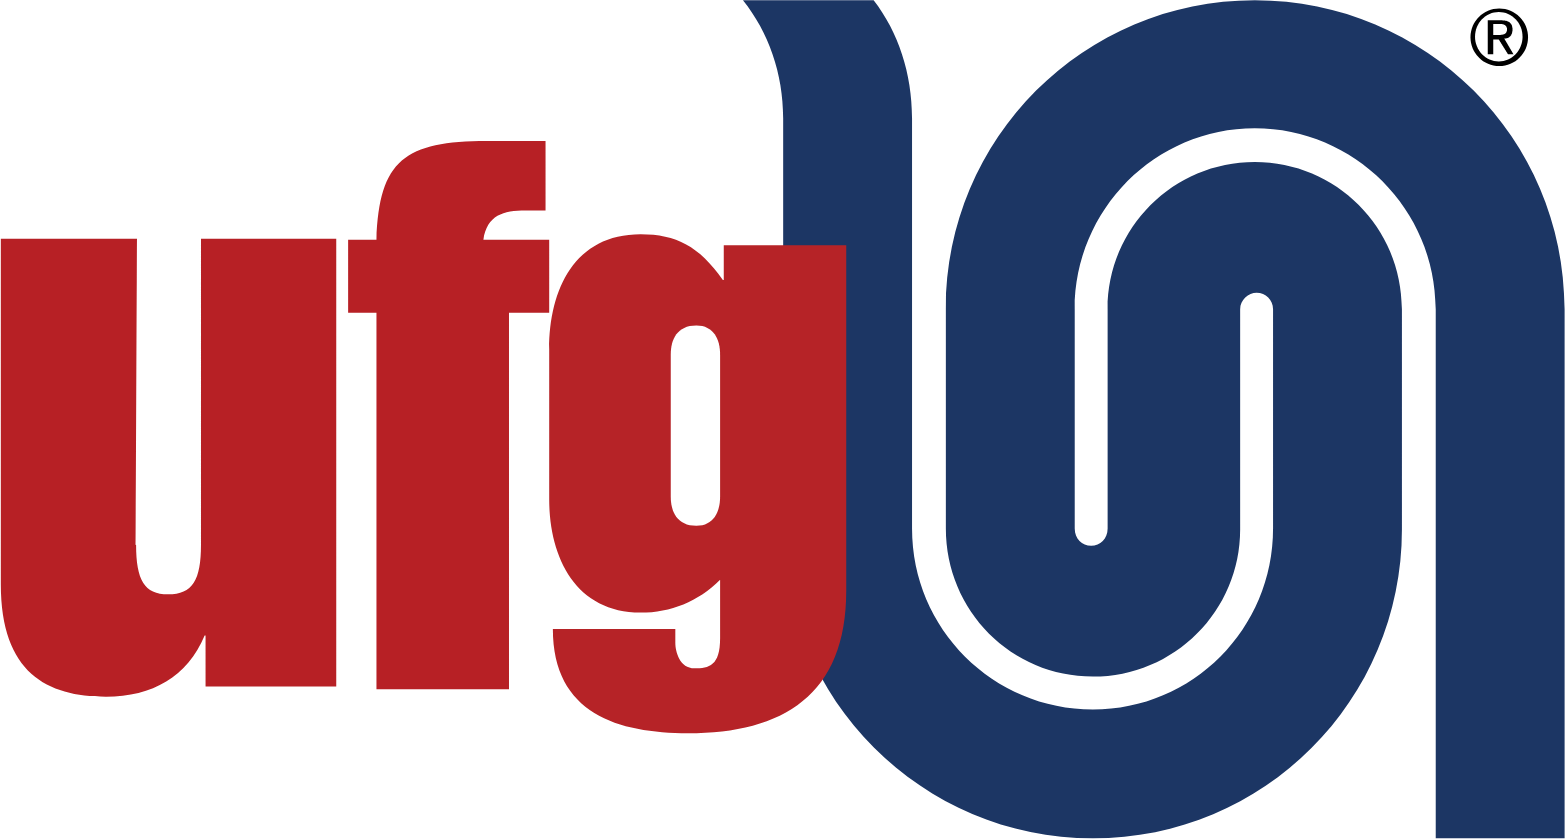 United Fire Group logo large (transparent PNG)